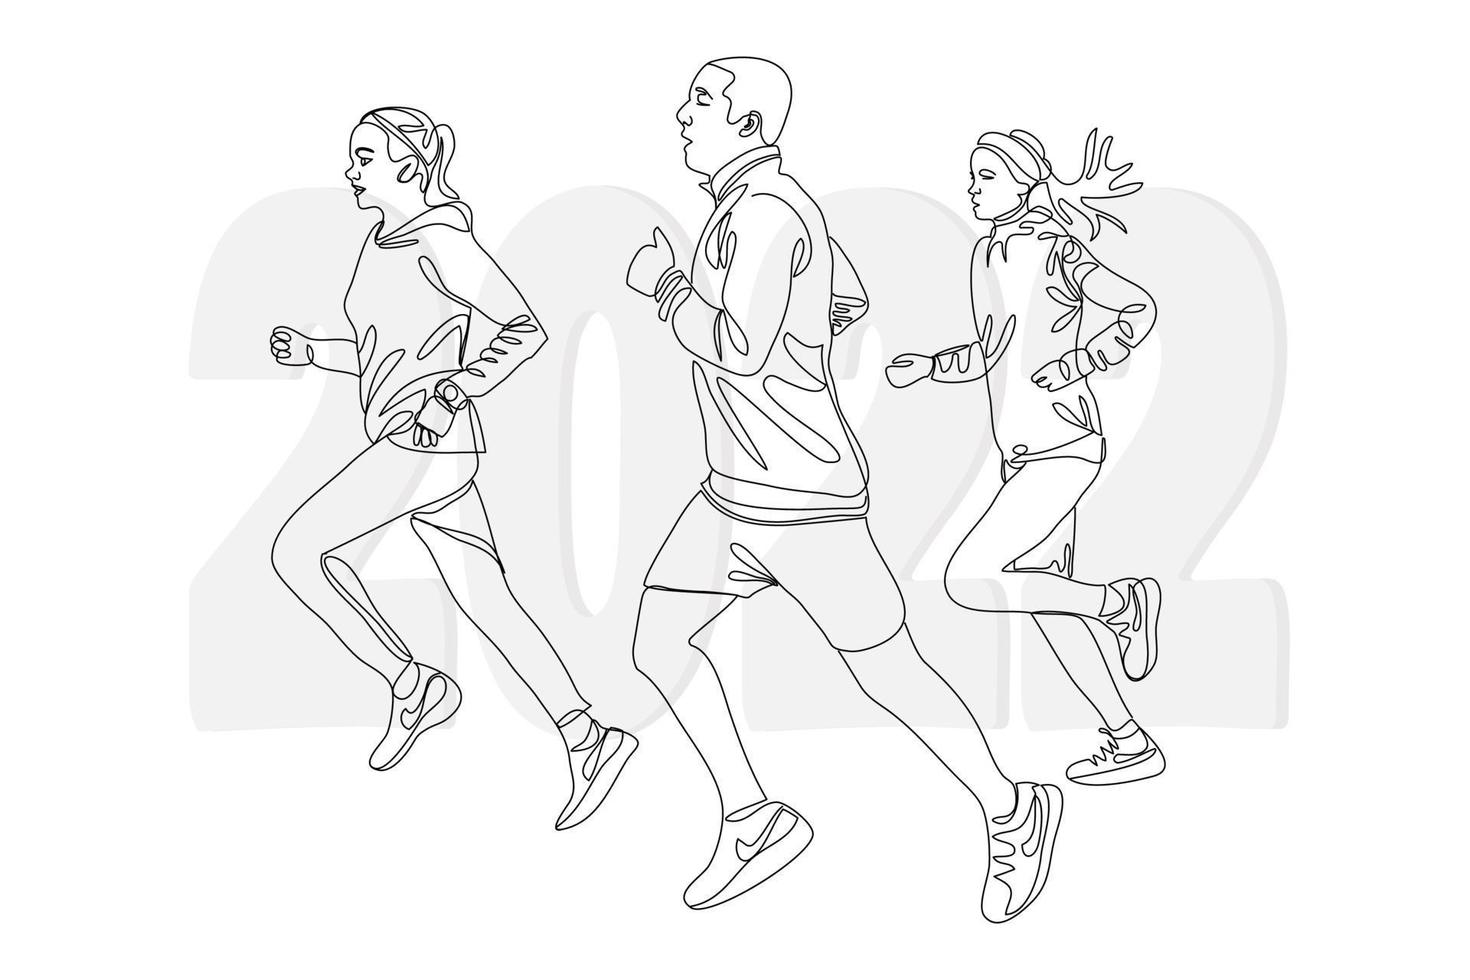 People running marathon 2022 one line vector